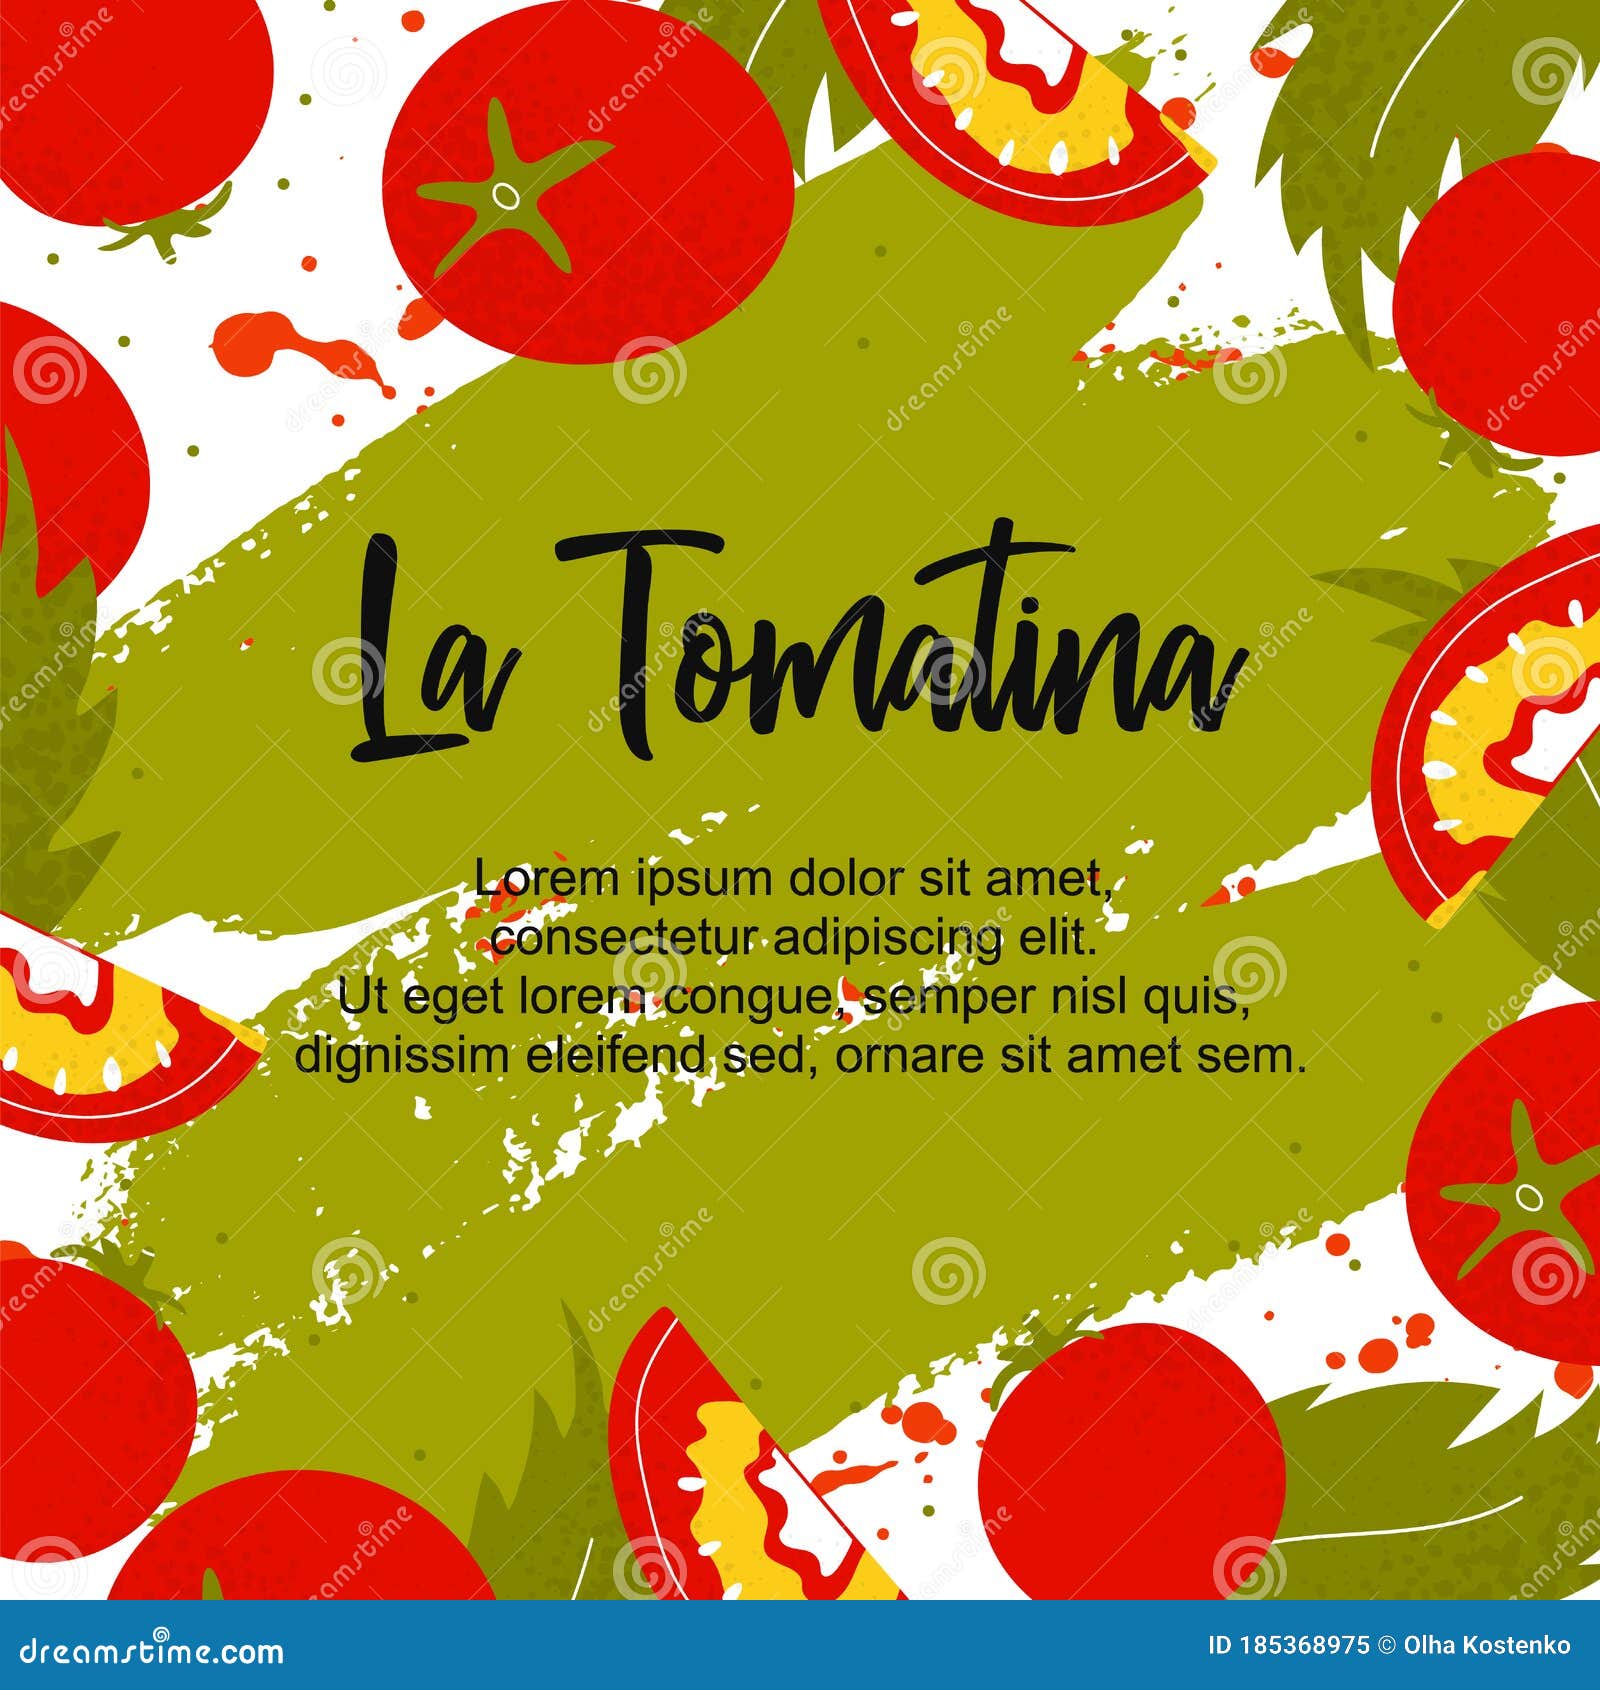 la tomatina. template poster